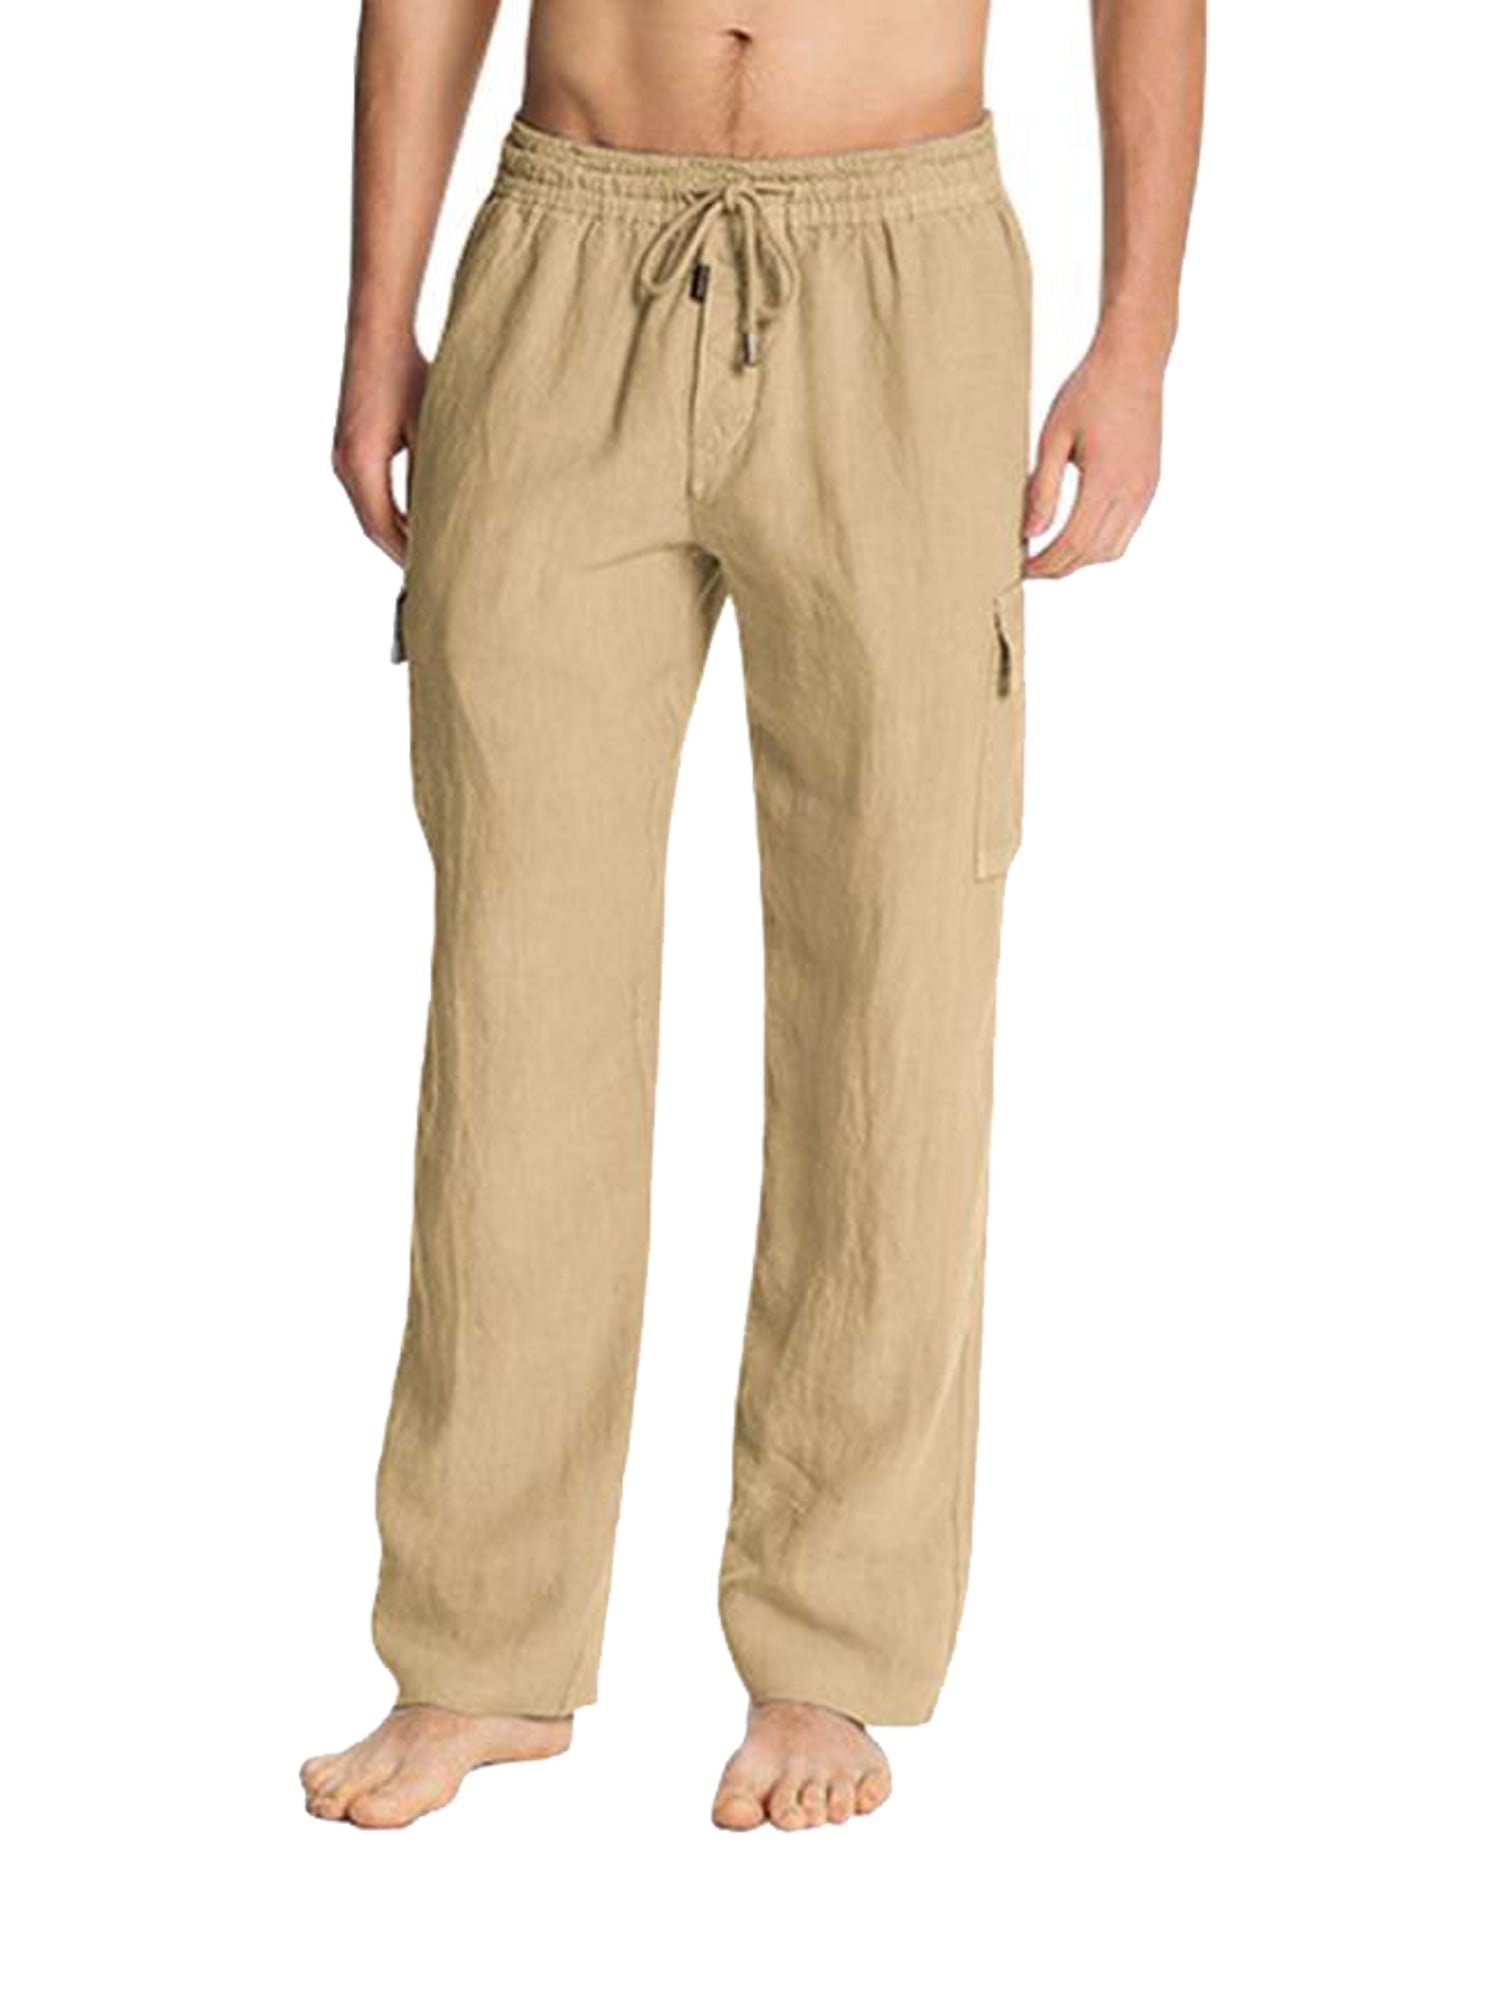 Men's Linen Pants Straight leg Trousers Summer Casual Beach Rope Tie Drawstring 